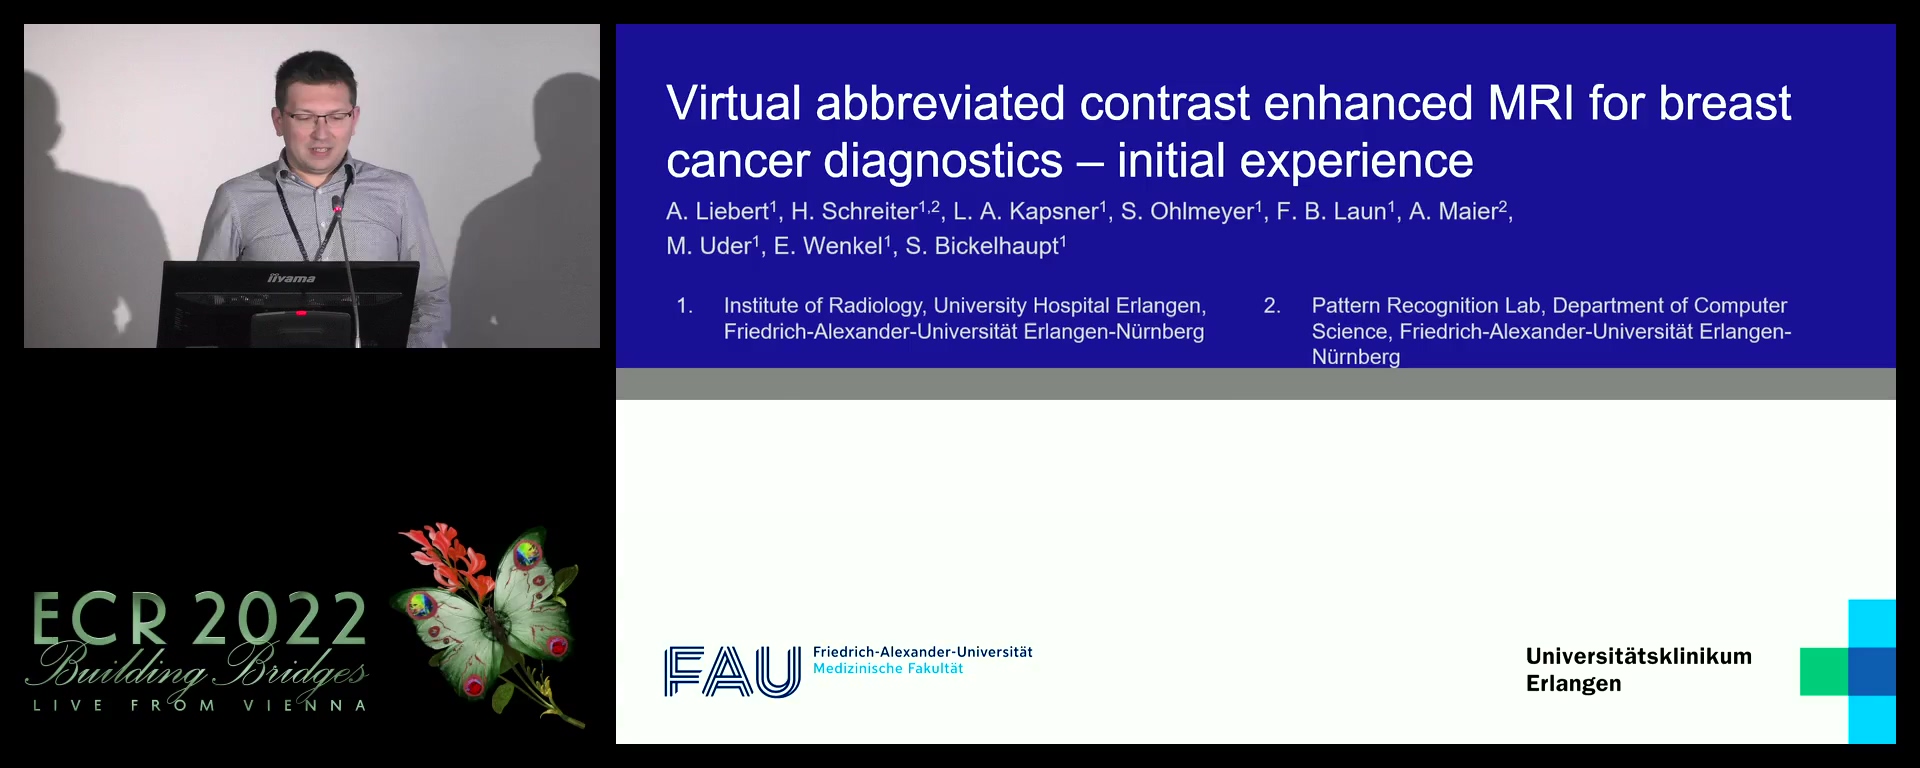 Virtual abbreviated contrast enhanced MRI for breast cancer diagnostics – initial experience